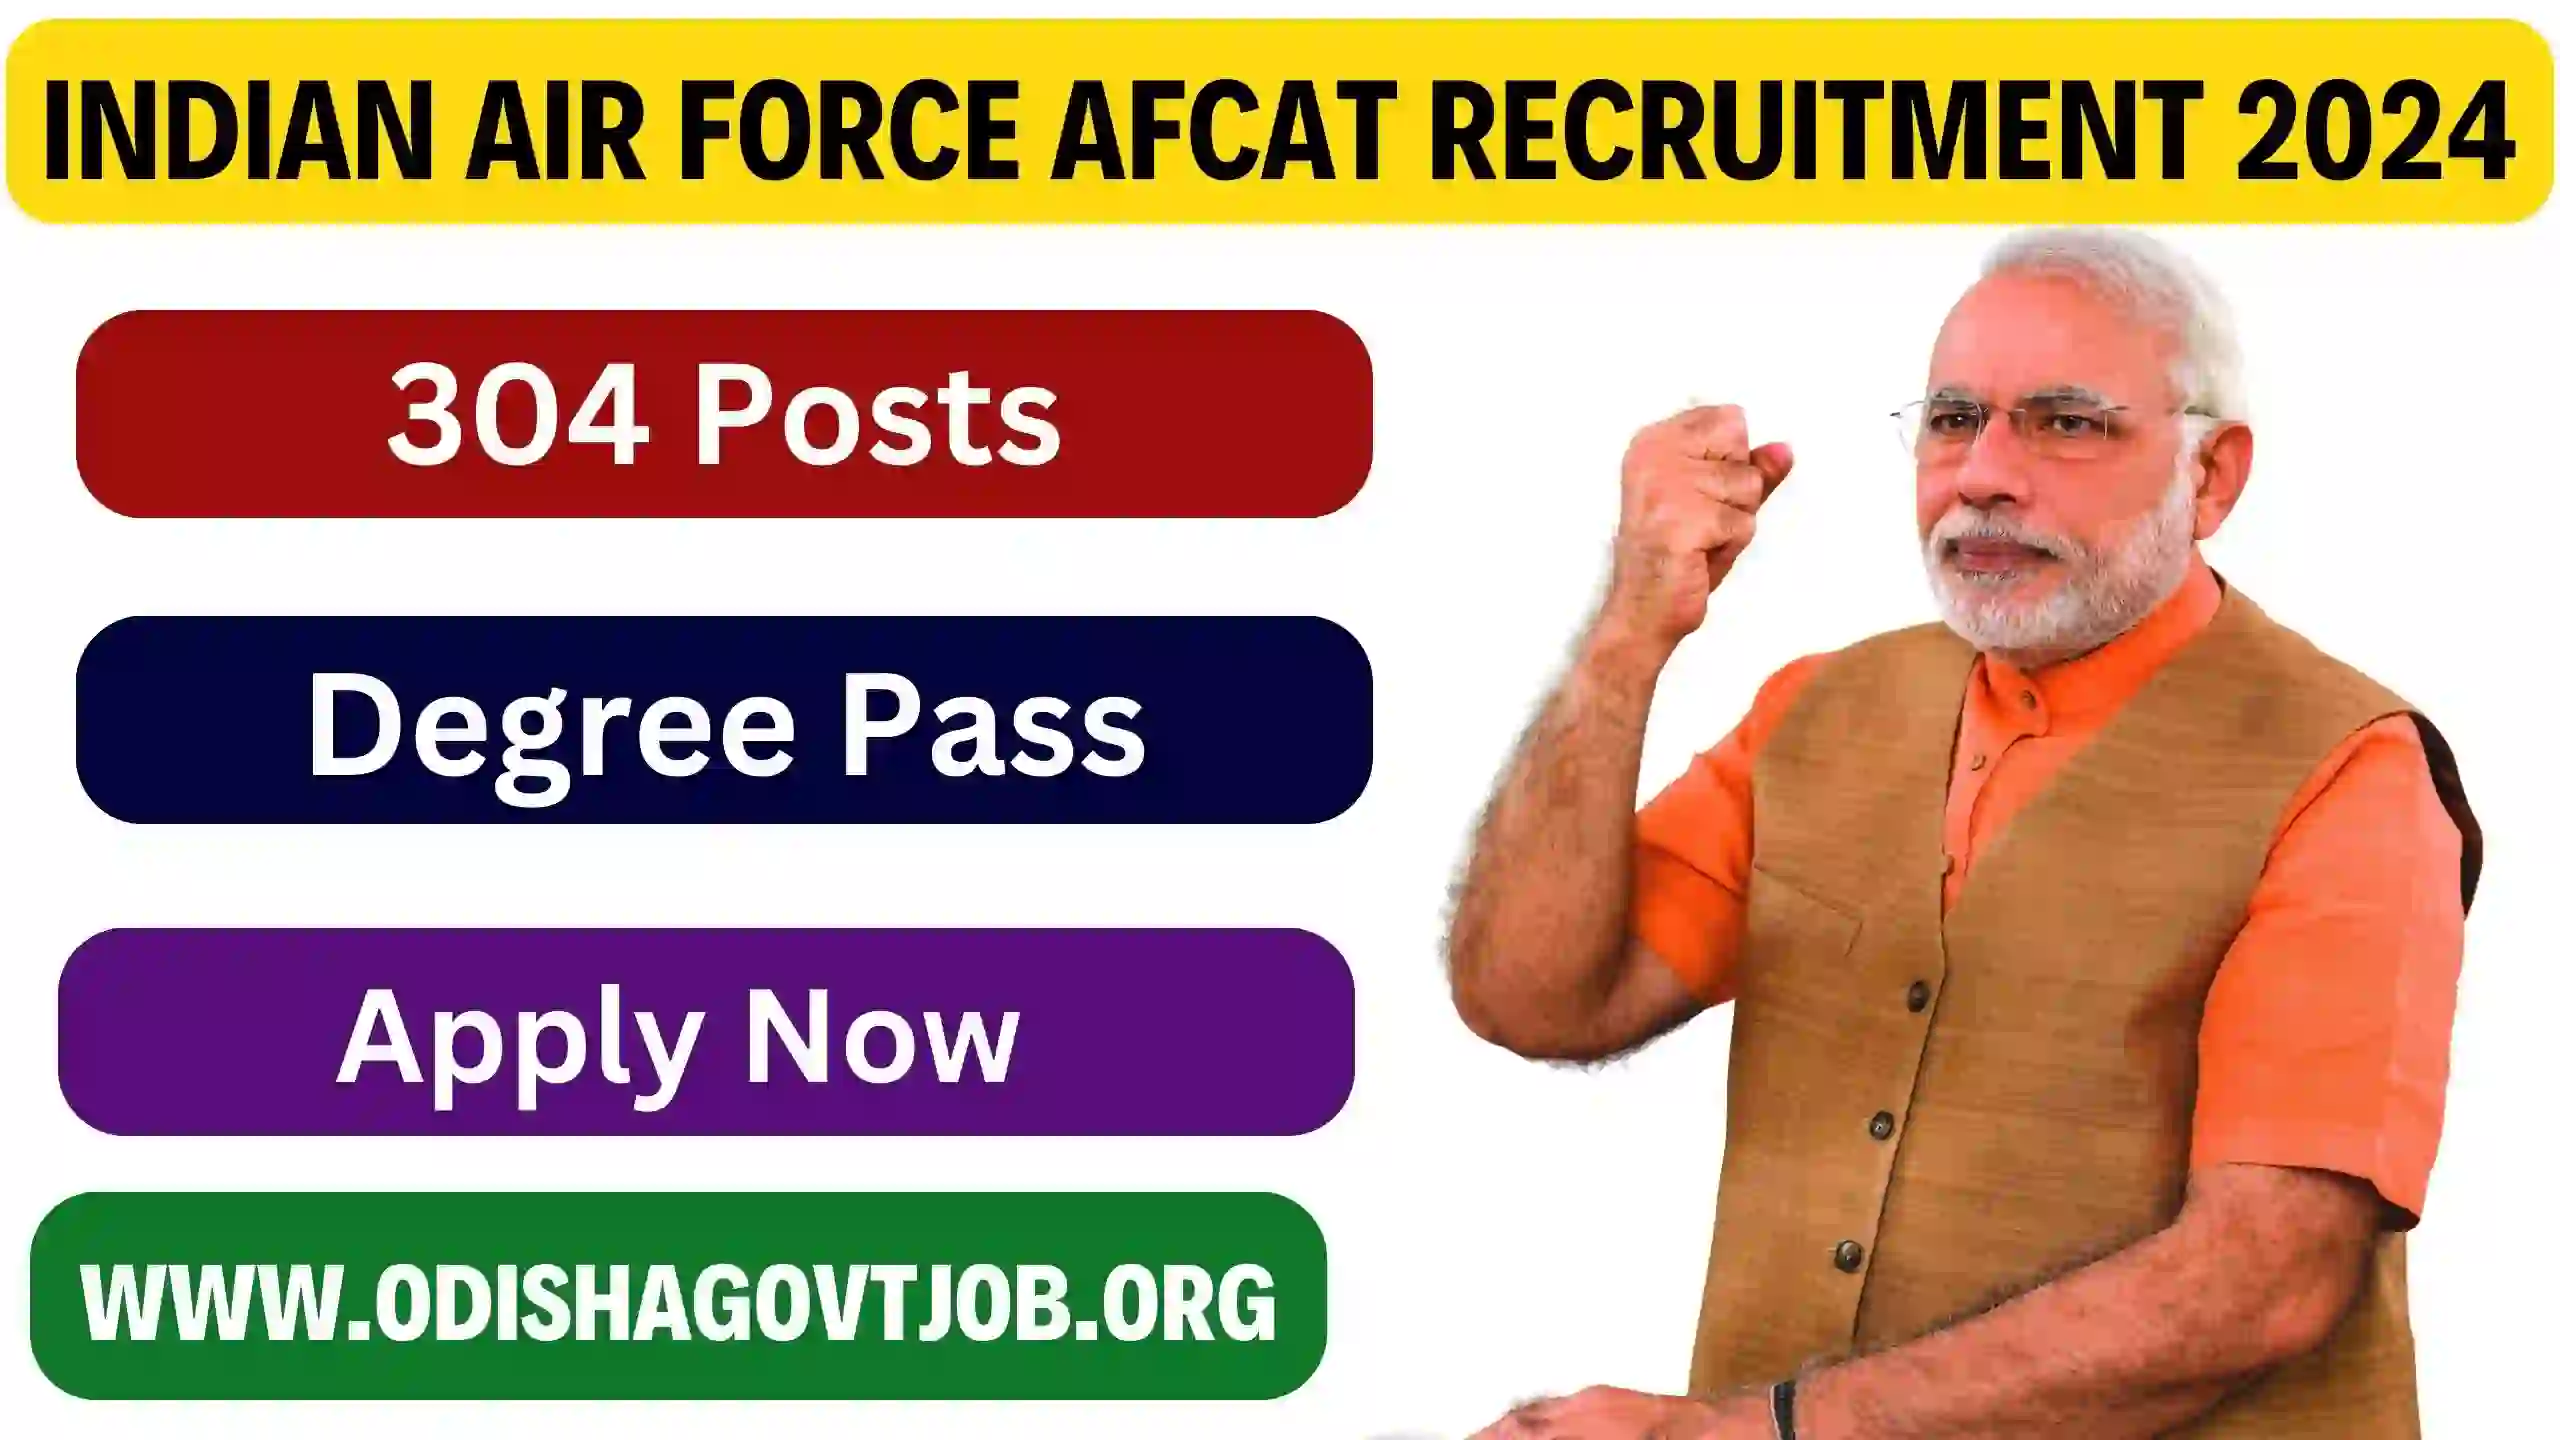 Indian Air Force AFCAT Recruitment 2024